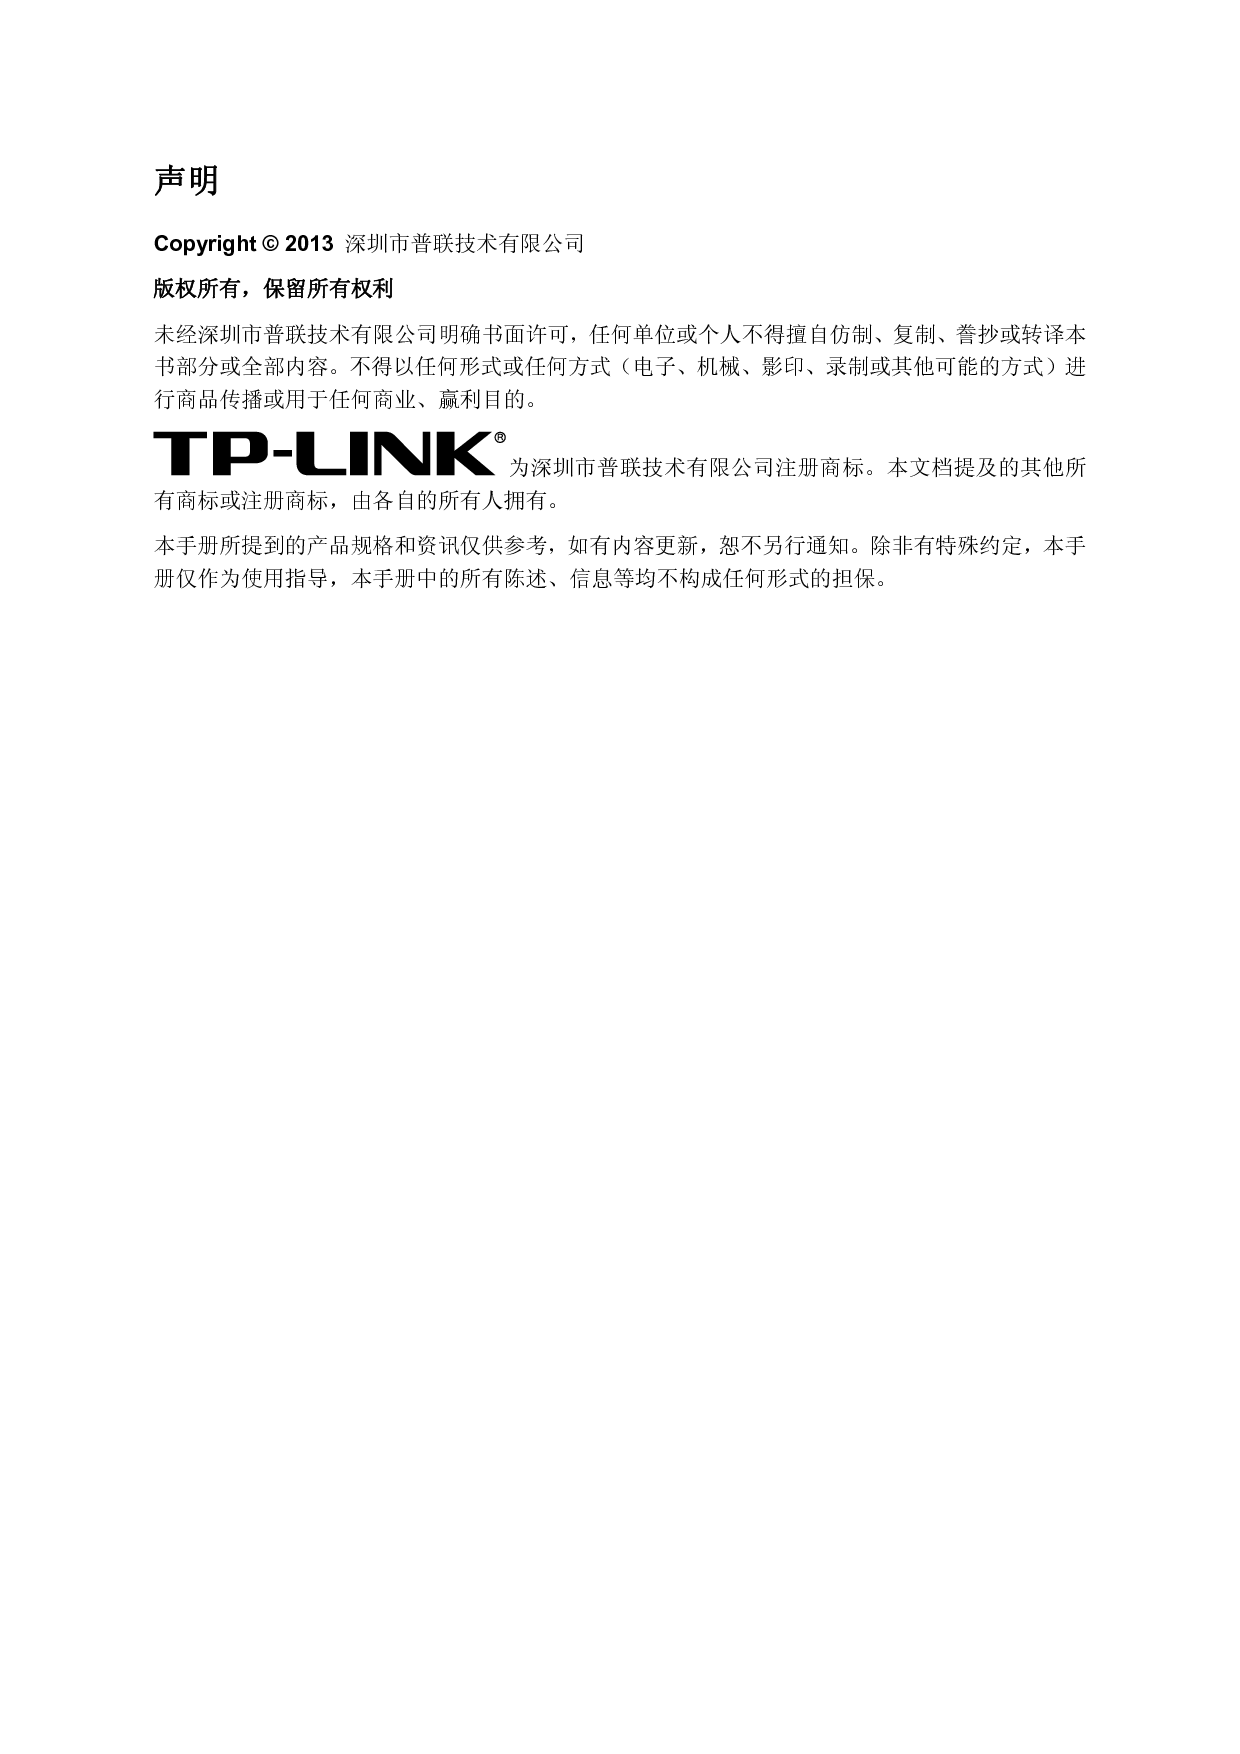 普联 TP-Link TL-WR842N 设置指南 第1页